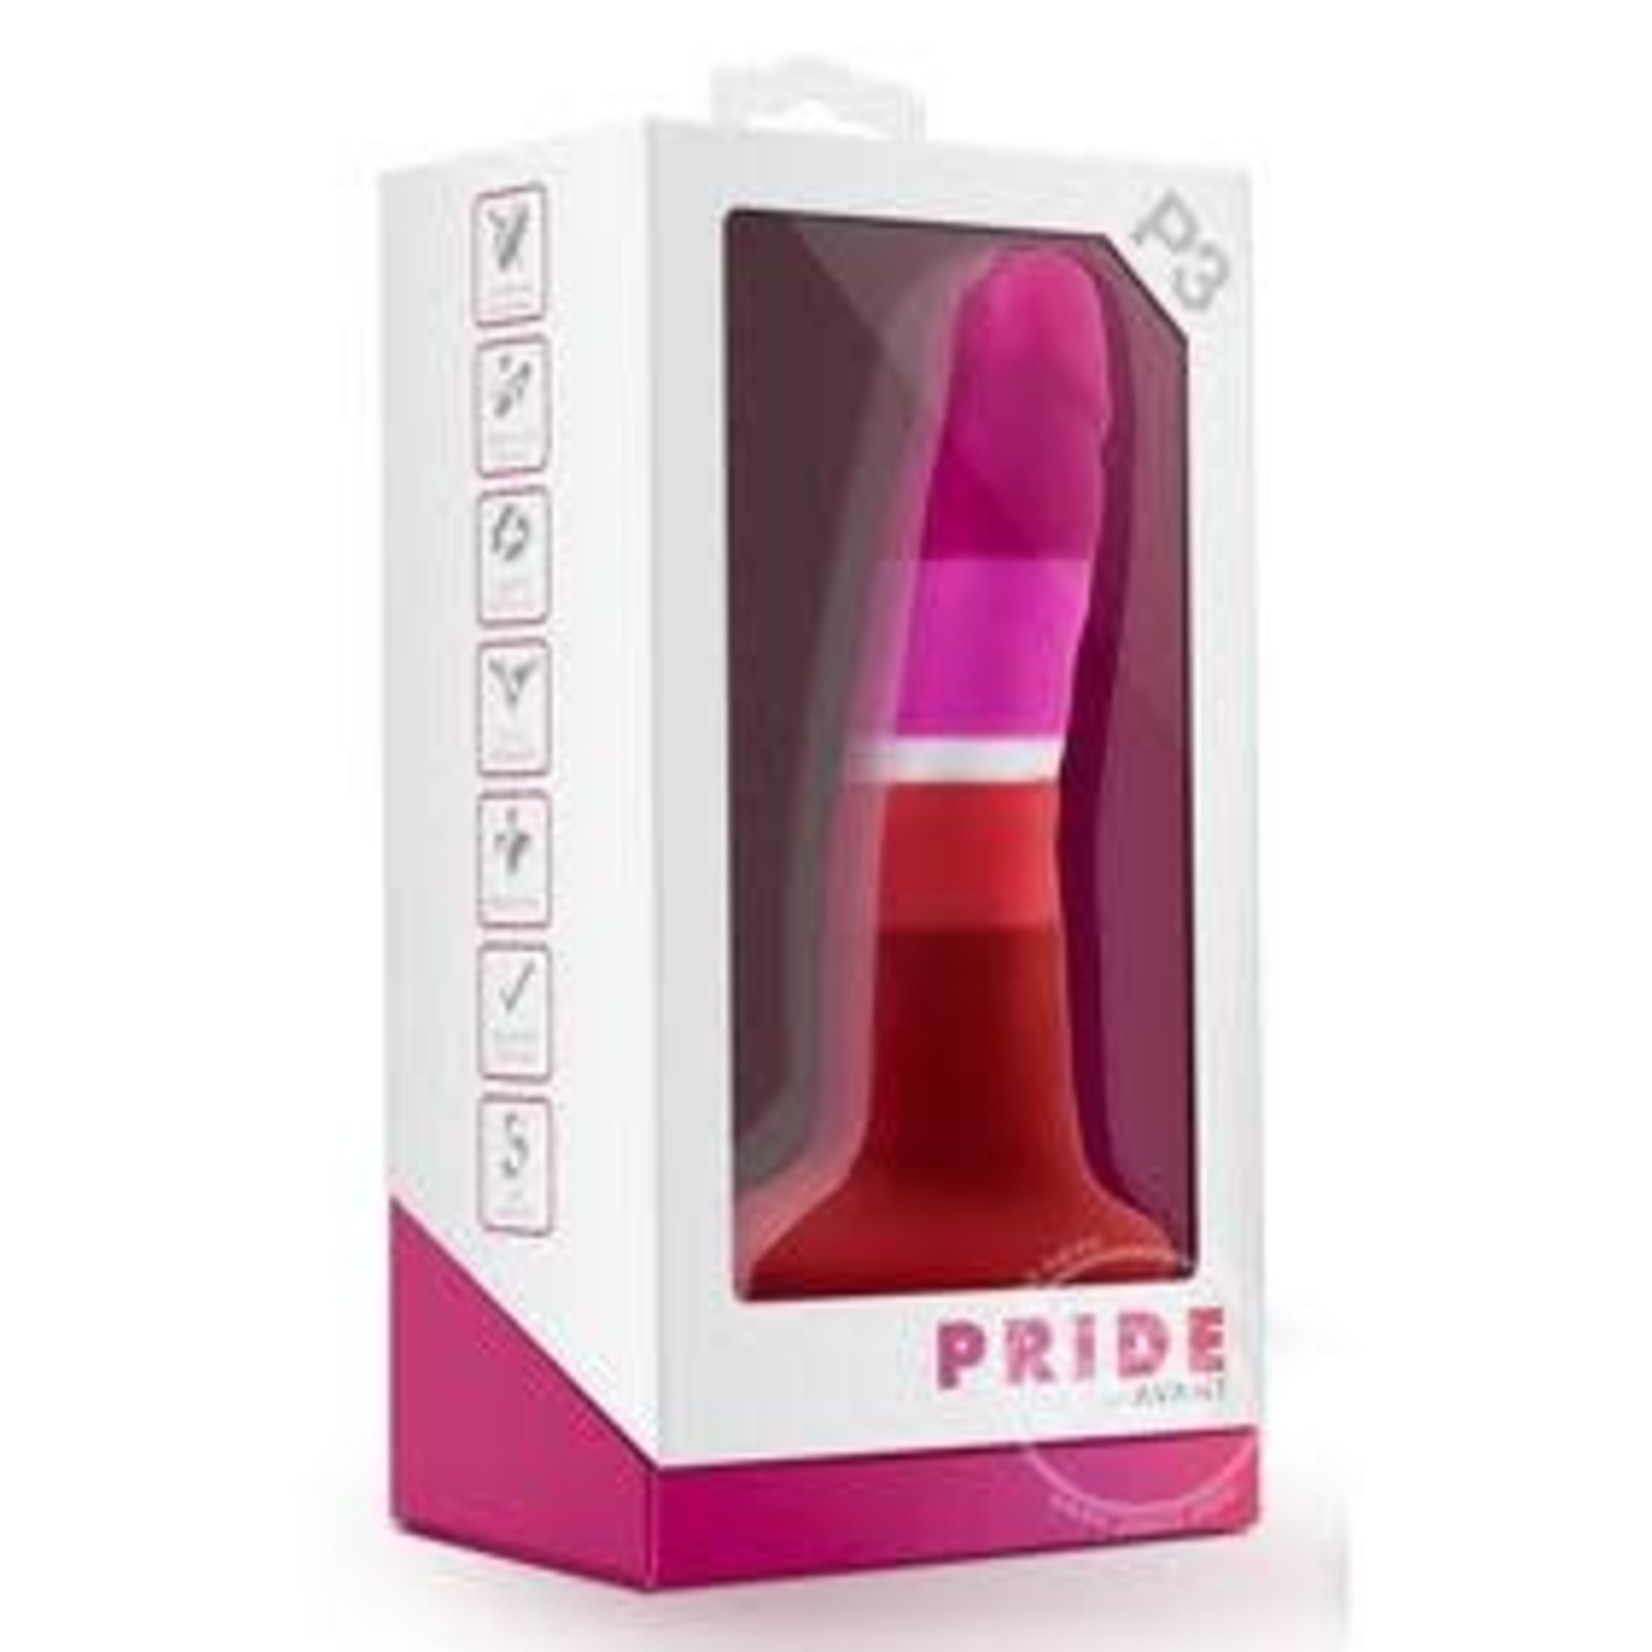 Blush Avant Pride P3 Silicone Dildo Waterproof Beauty 6 Inch